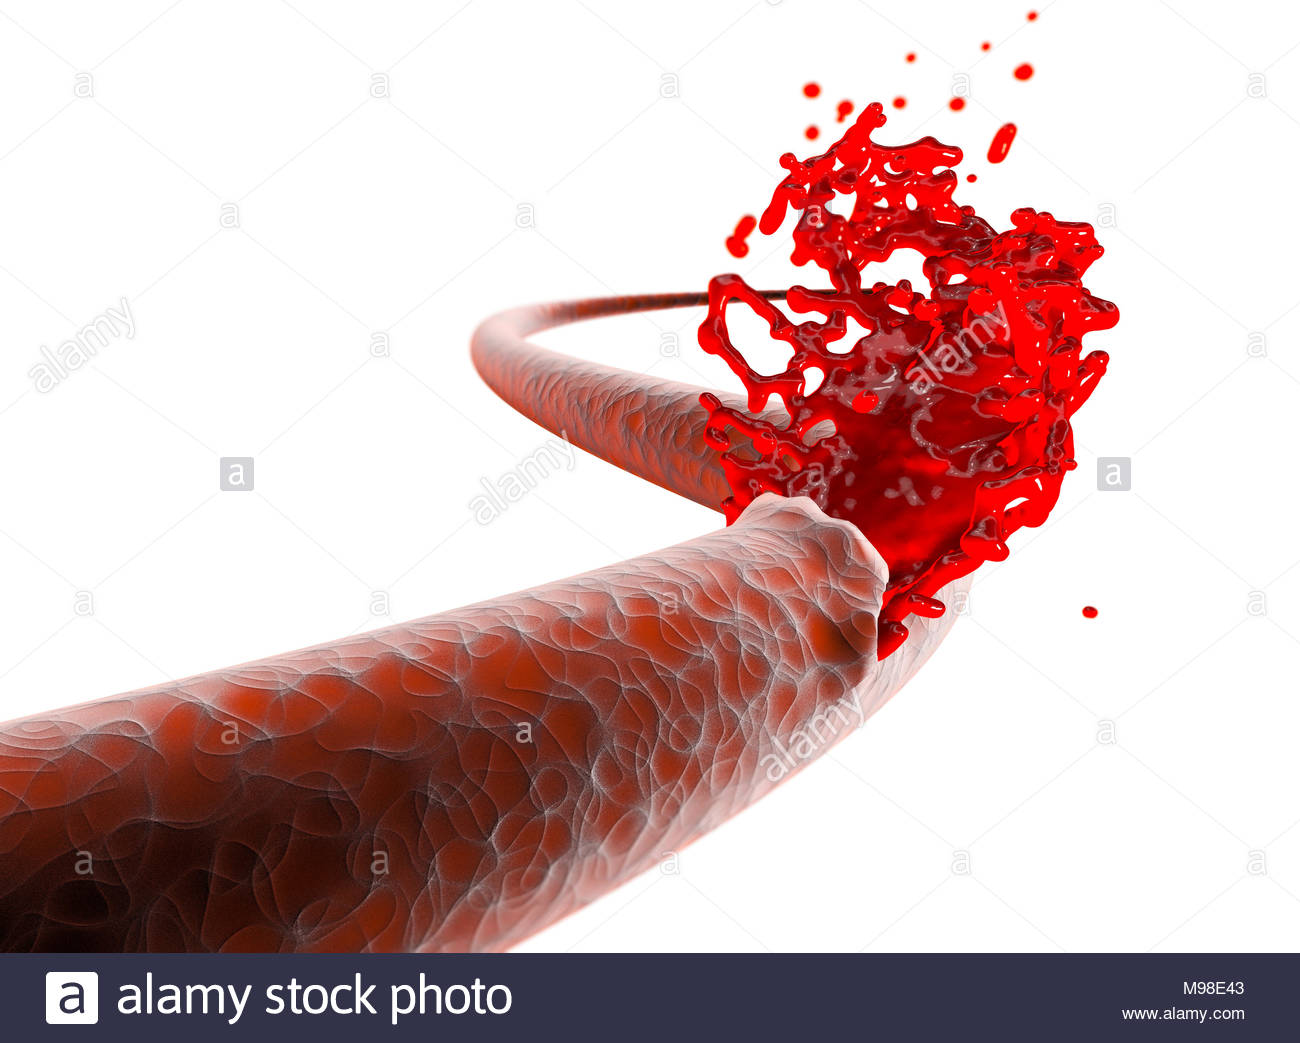 internal bleeding